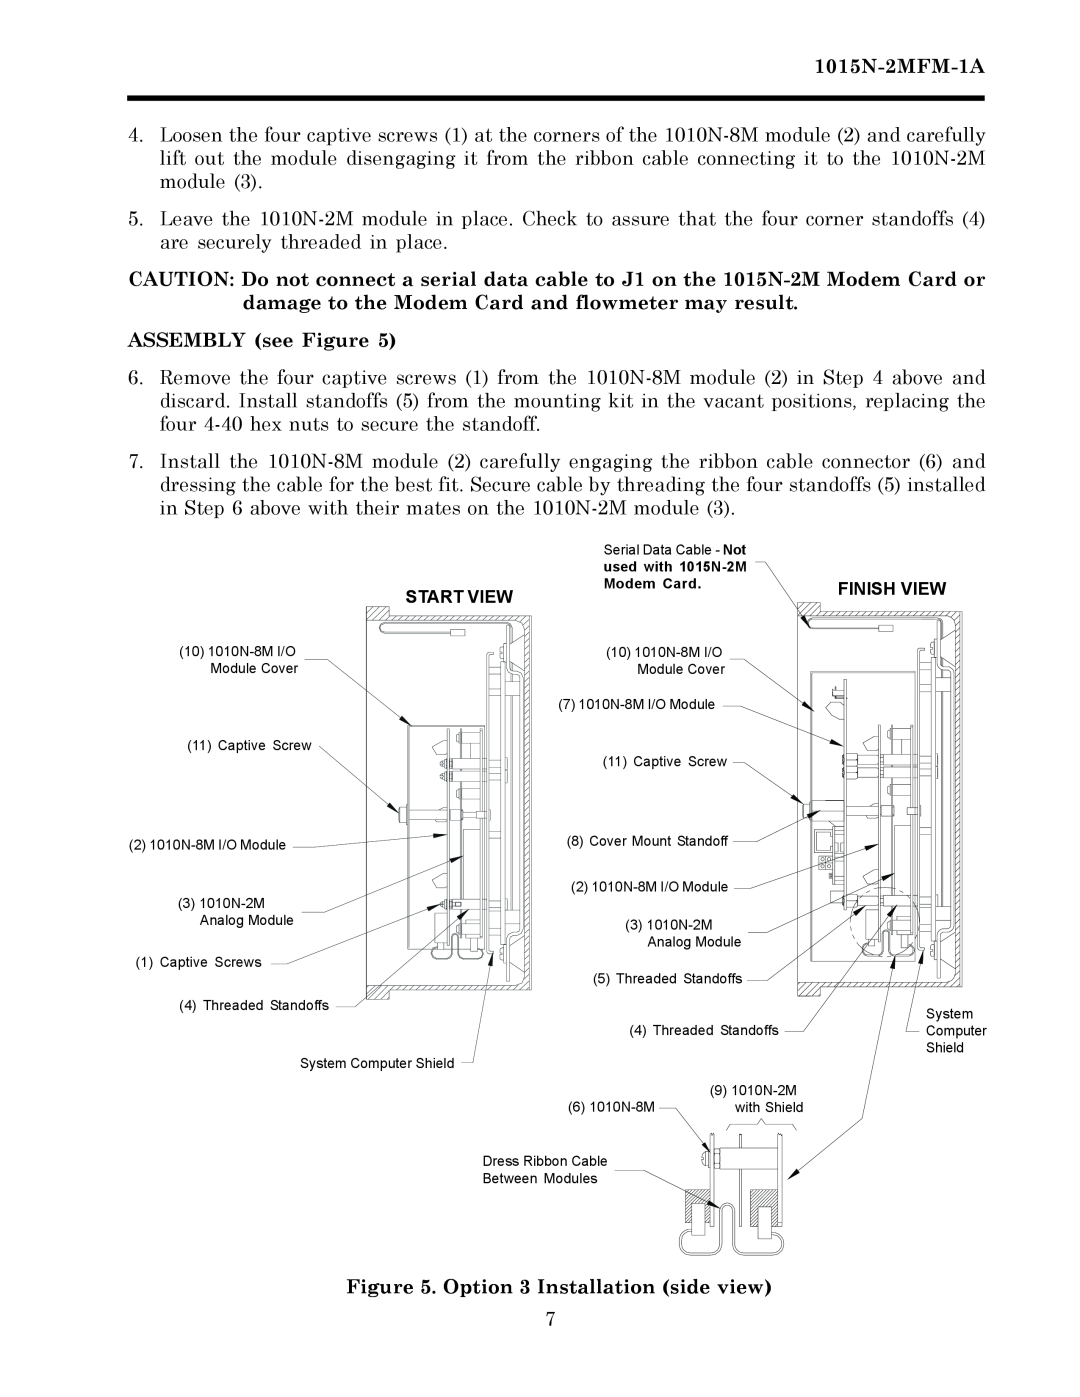 Siemens 1015N-2MFM-1A manual 